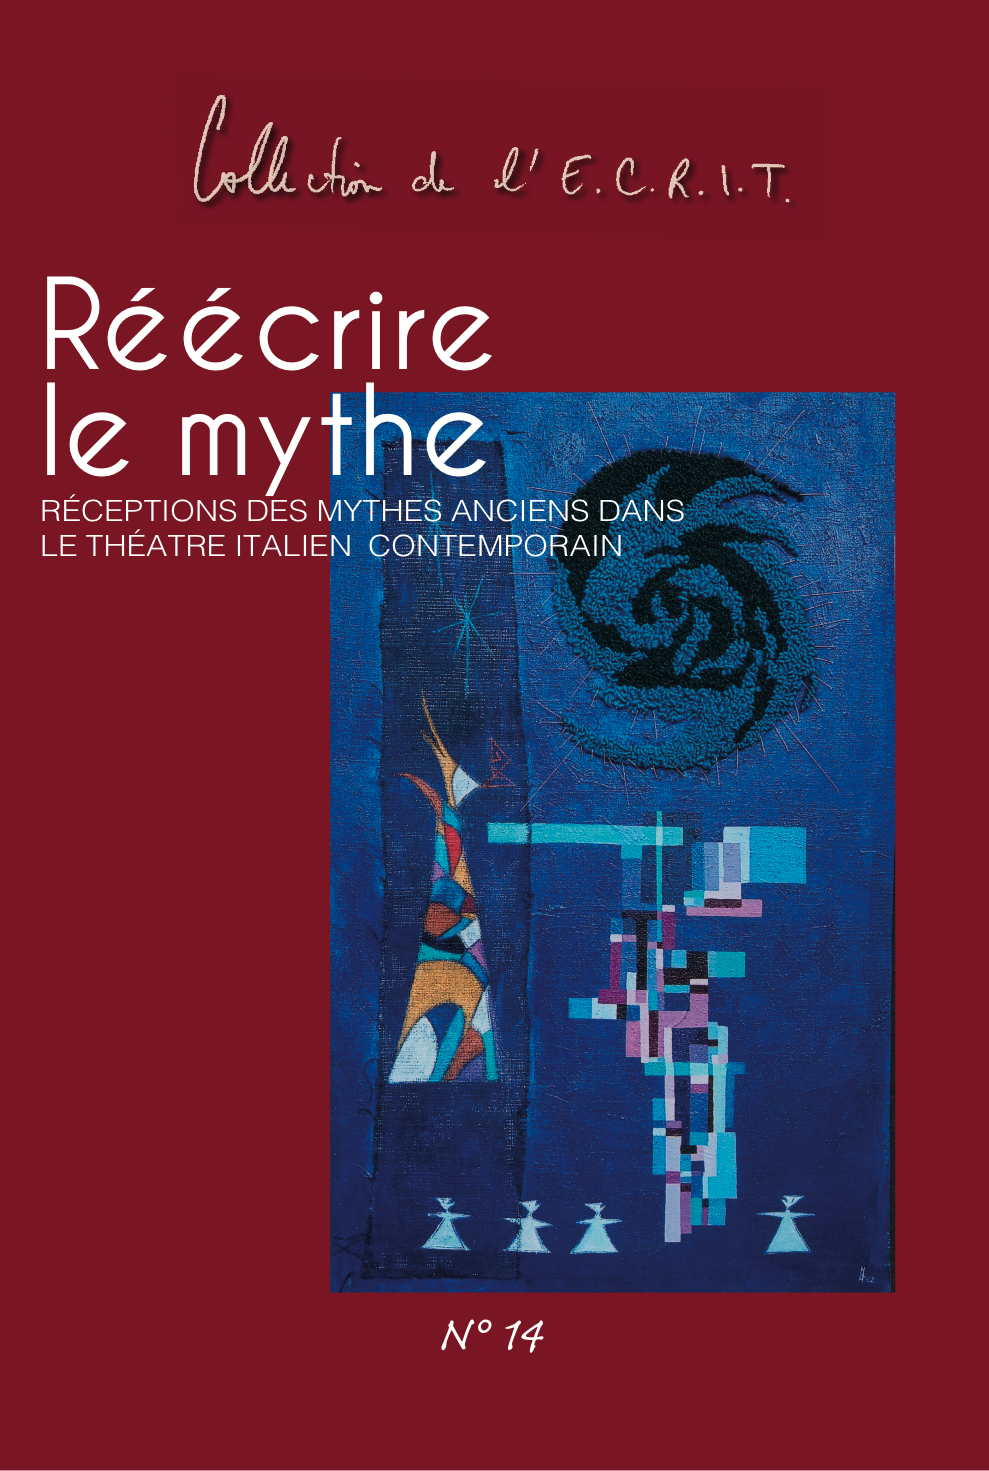 Imagen de portada del libro Réécrire le mythe